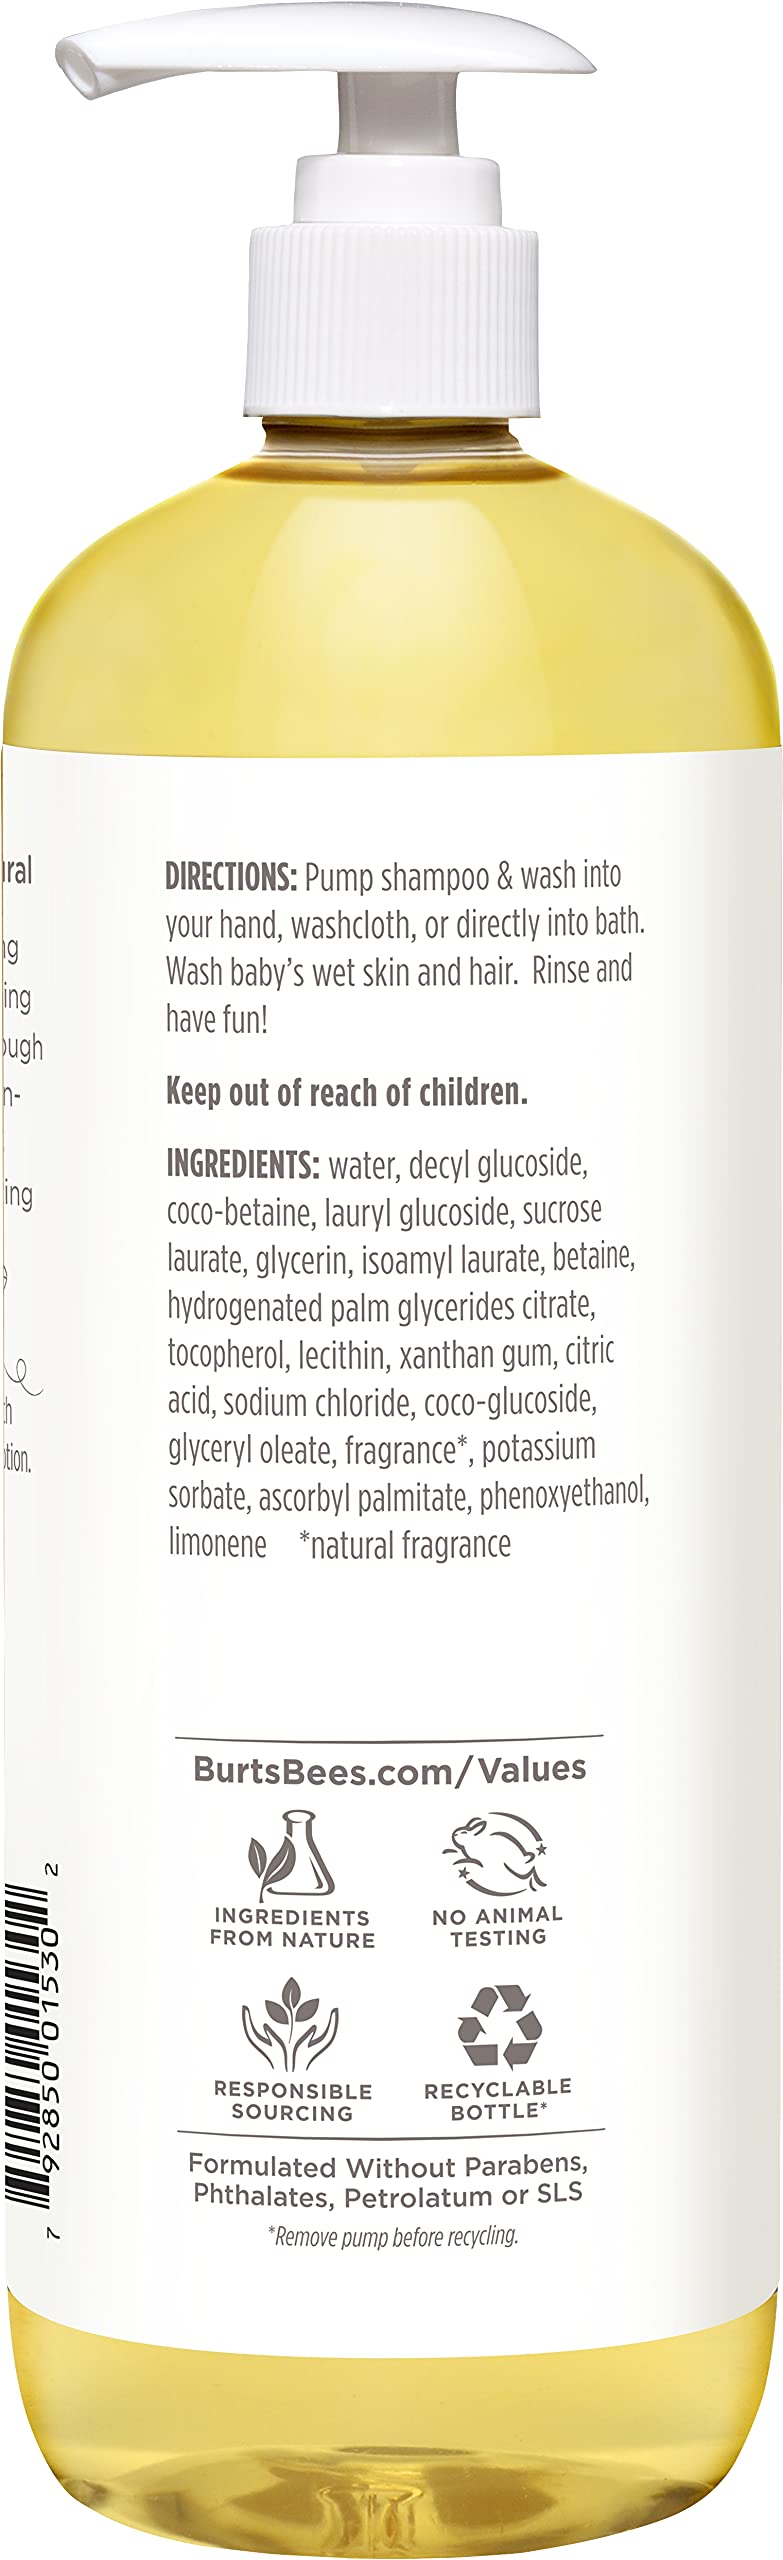 Burt's Bees Baby Shampoo & Wash, Tear Free Non Irritating Soap, Gentle Plant Based Formula, Pediatrician Tested, Original - 21 oz